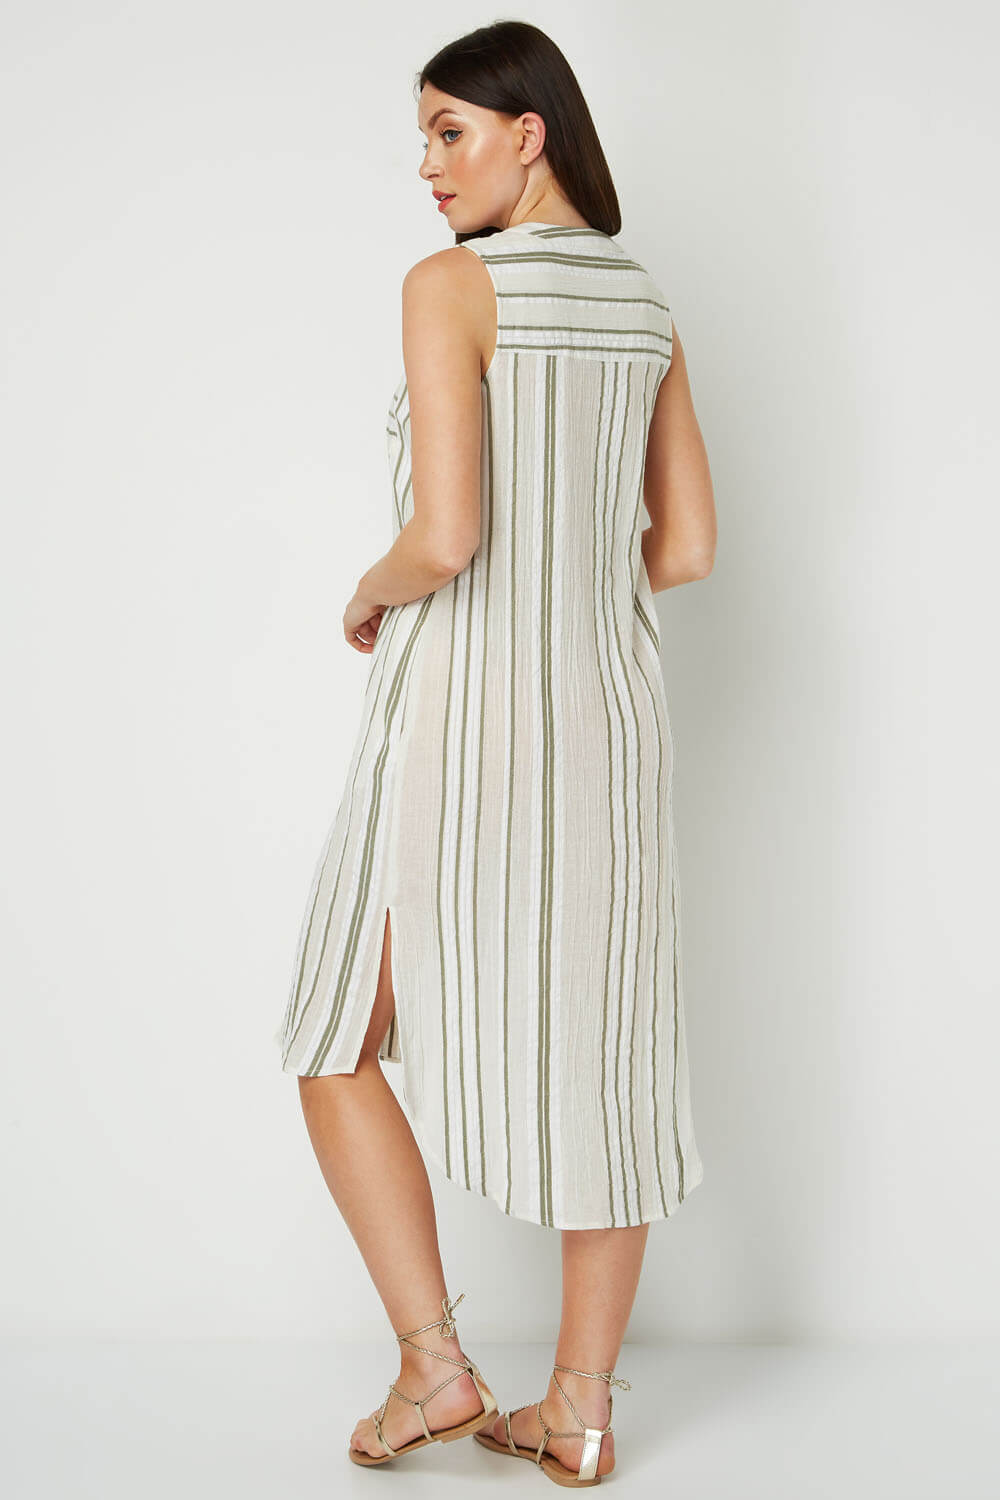 Stripe A line Shift Dress in Khaki - Roman Originals UK